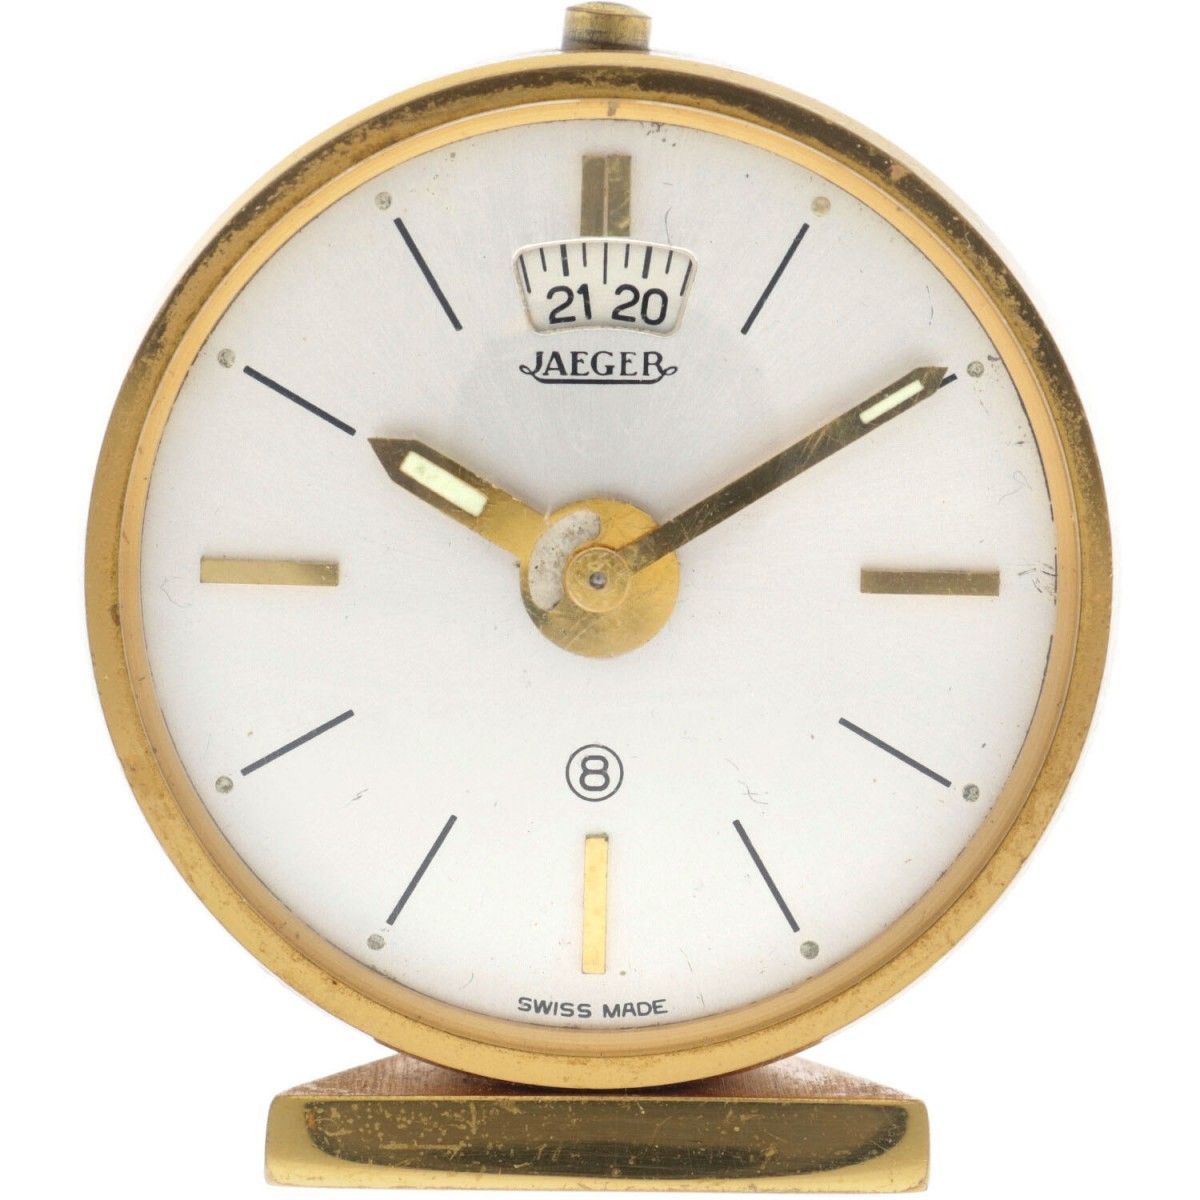 Jaeger LeCoultre travel clock appr. 1960 indicador analógico AM-PM - alarma de 2&hellip;